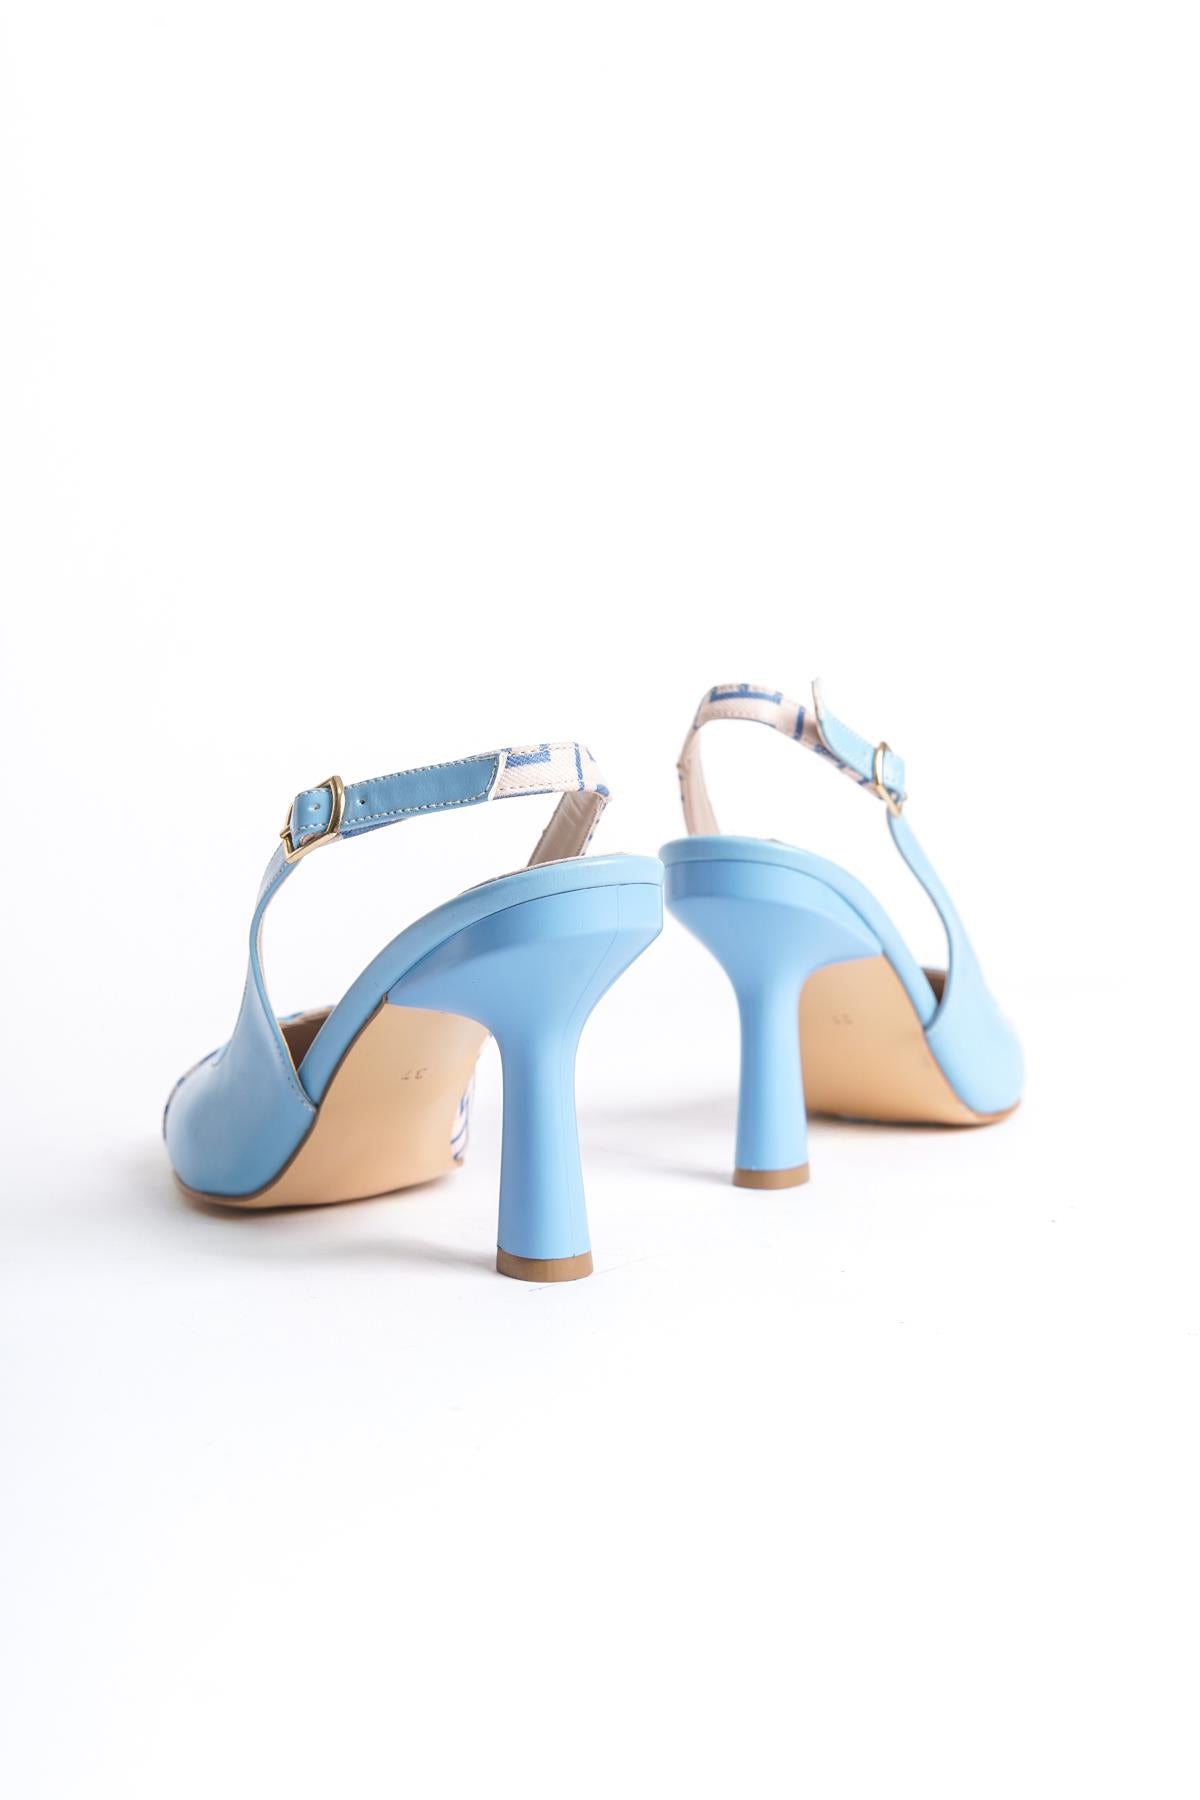 Women's Blue Skin Fabric Detailed Heeled Shoes (8) cm heel - STREETMODE™